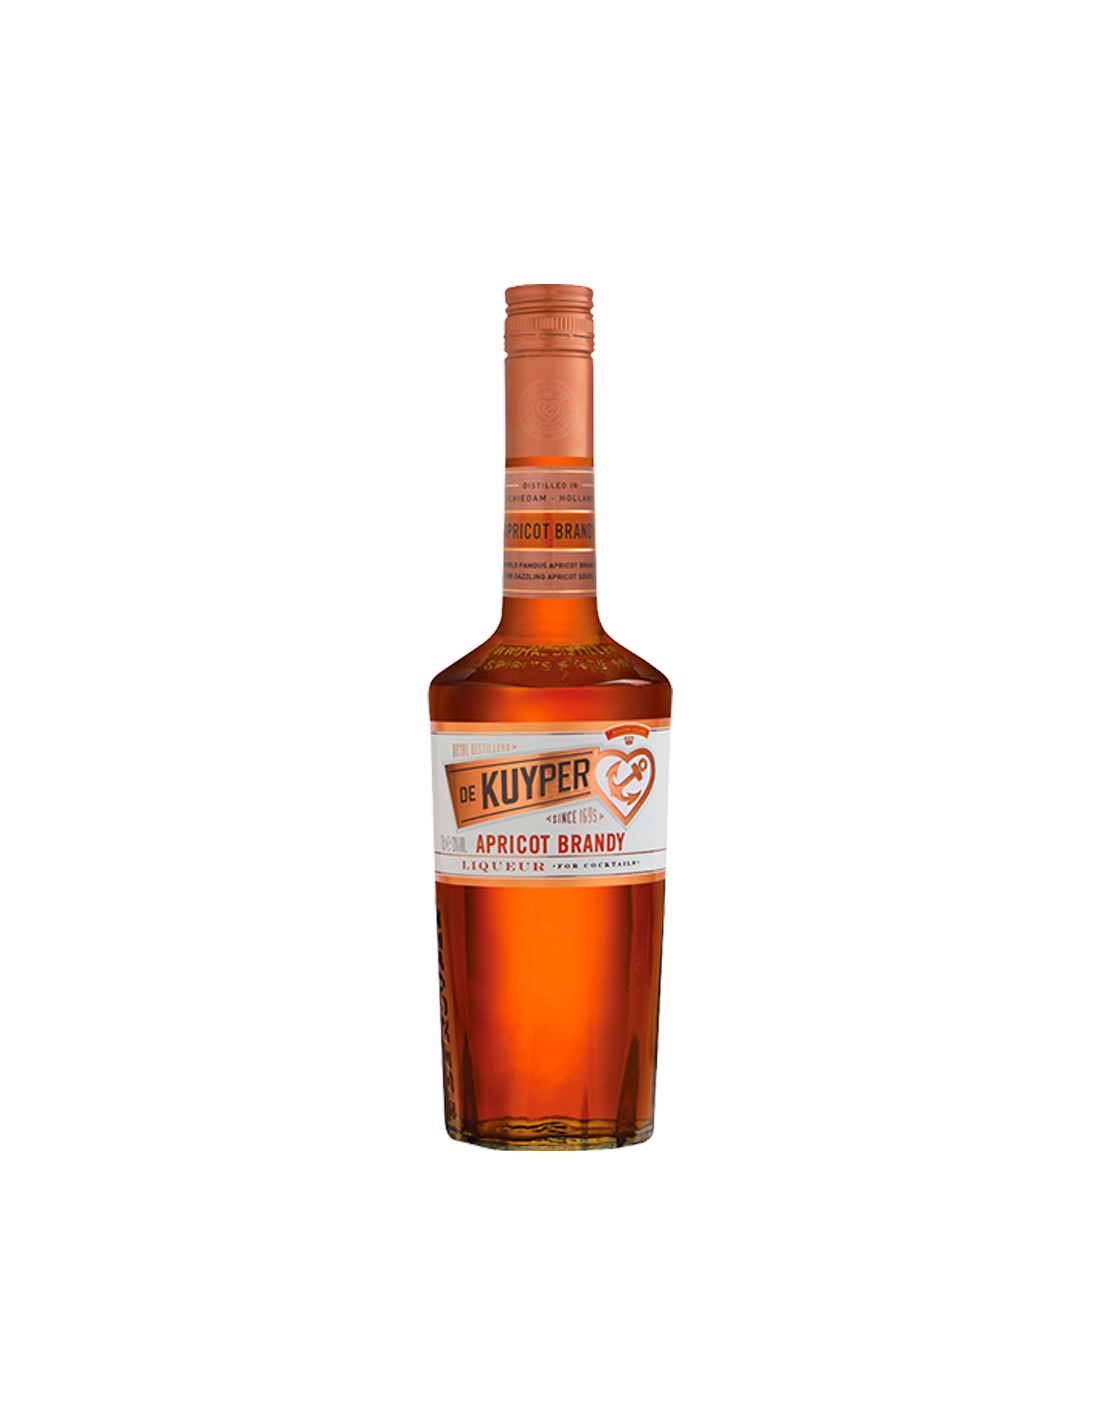 Lichior De Kuyper Apricot Brandy, 20% alc., 0.7L, Olanda alcooldiscount.ro